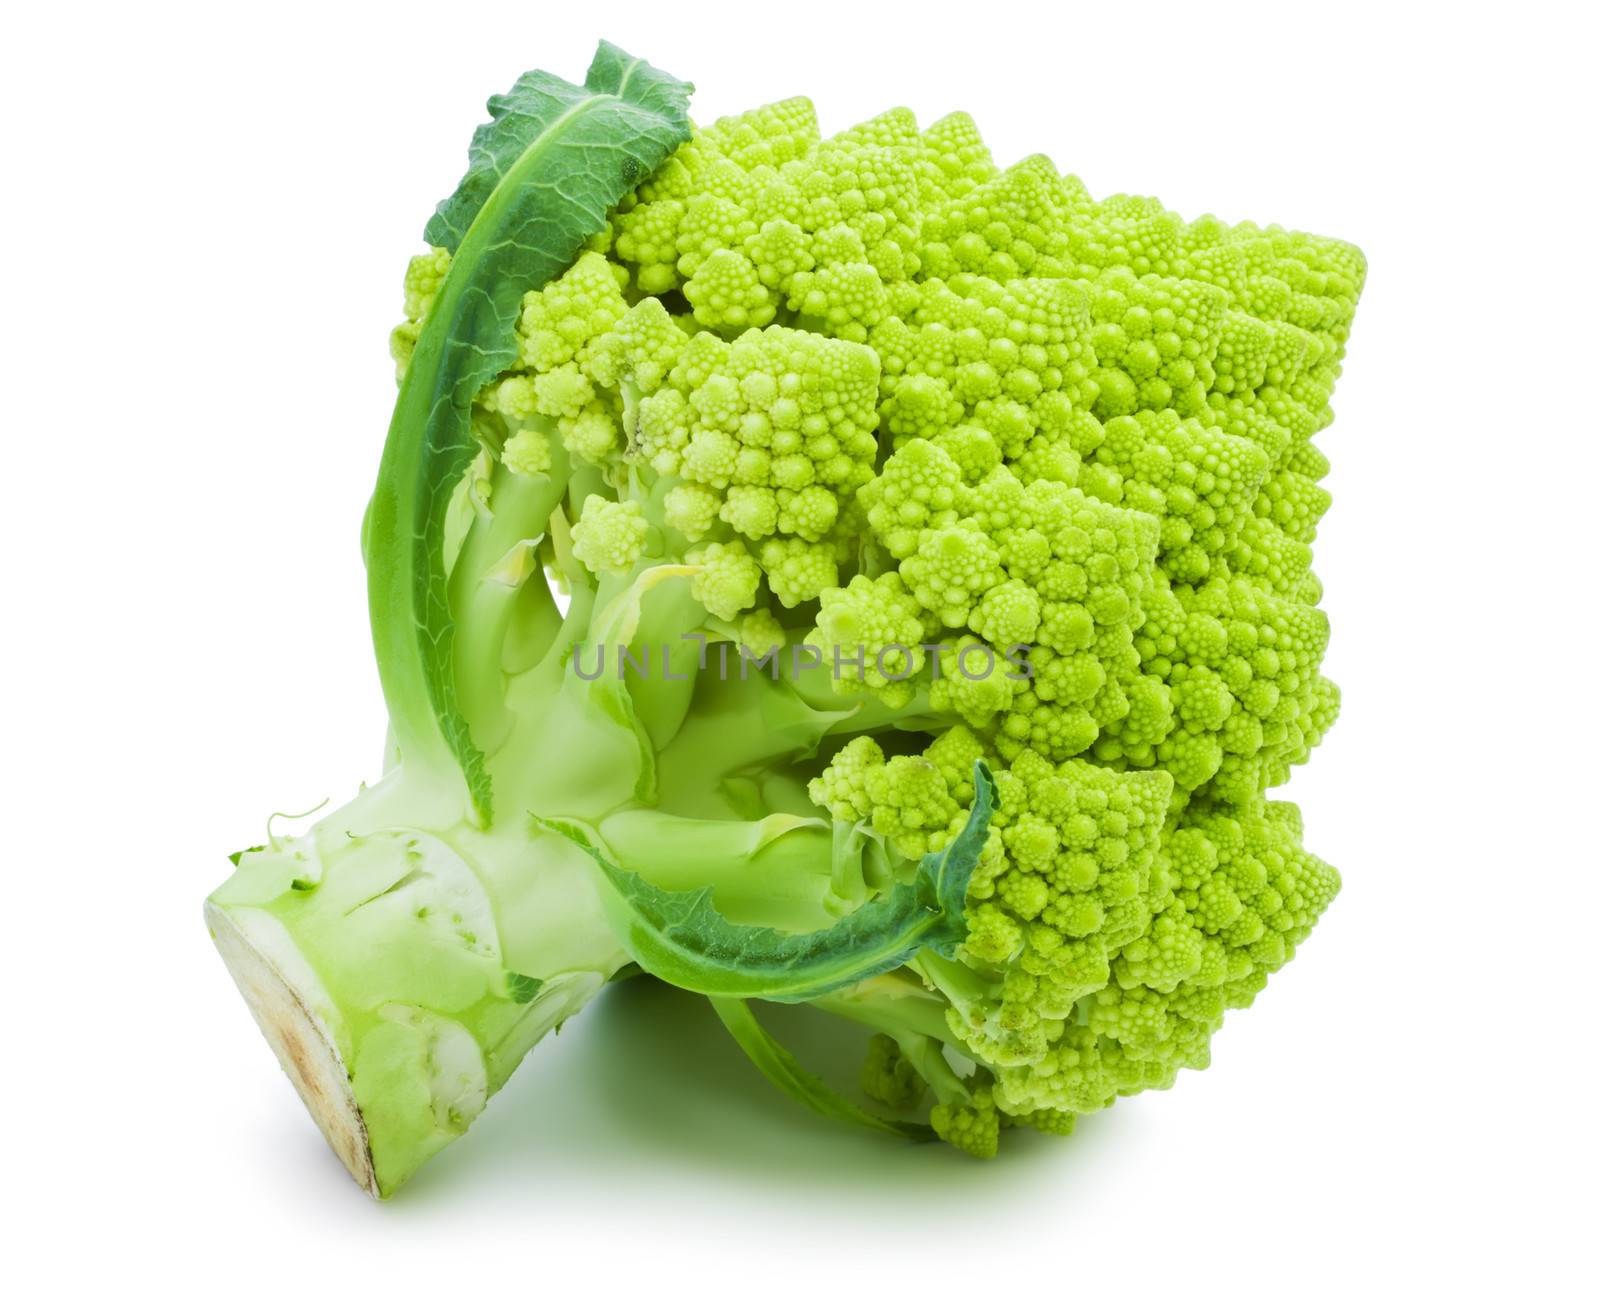 Green Romanesco broccoli isolated on white background